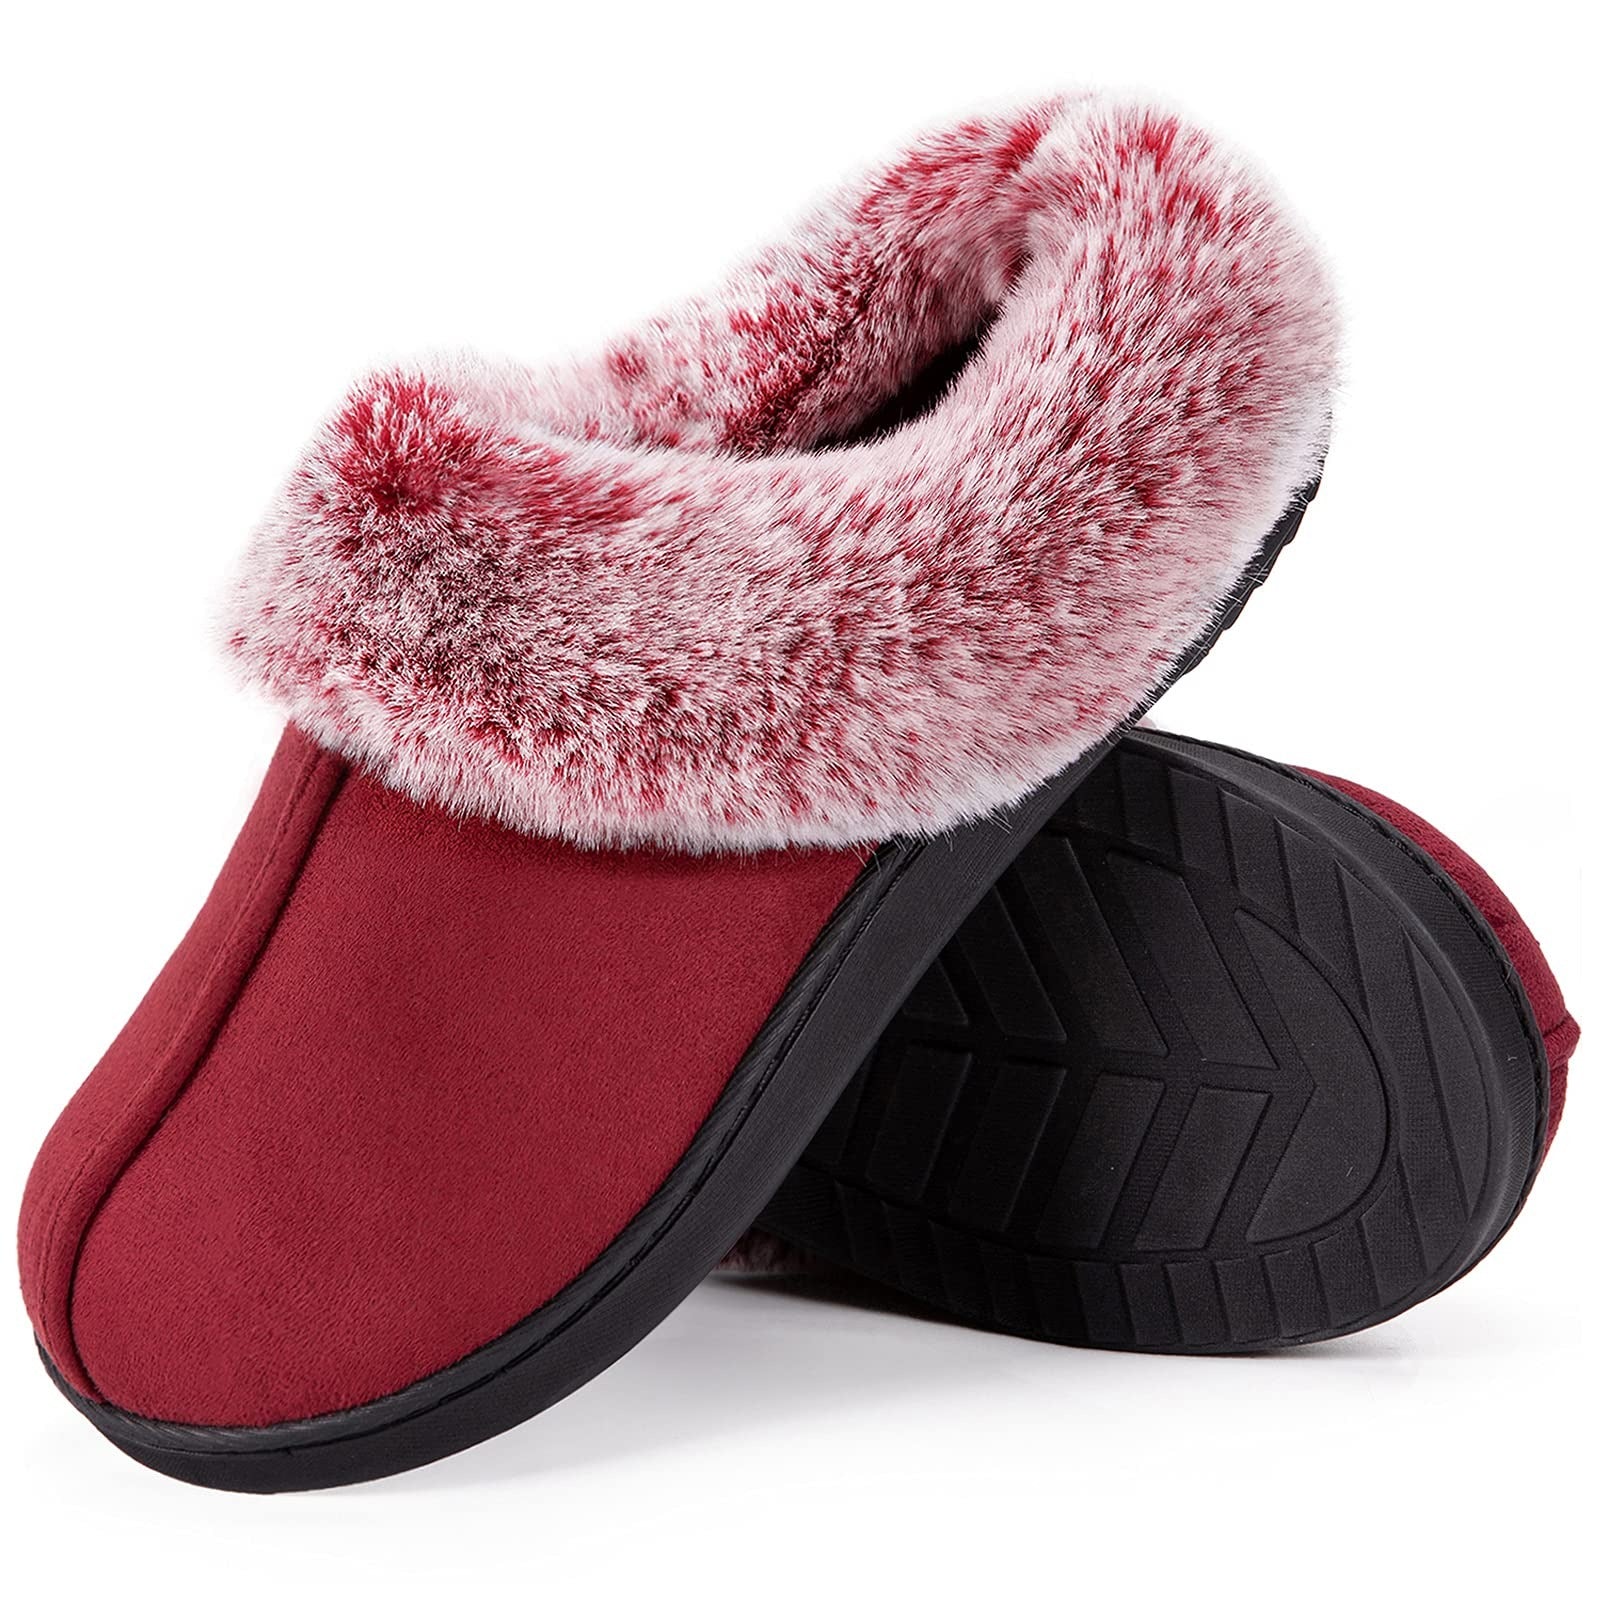 HOMETOP Women's Red Memory Foam House Slippers - Size 7 US